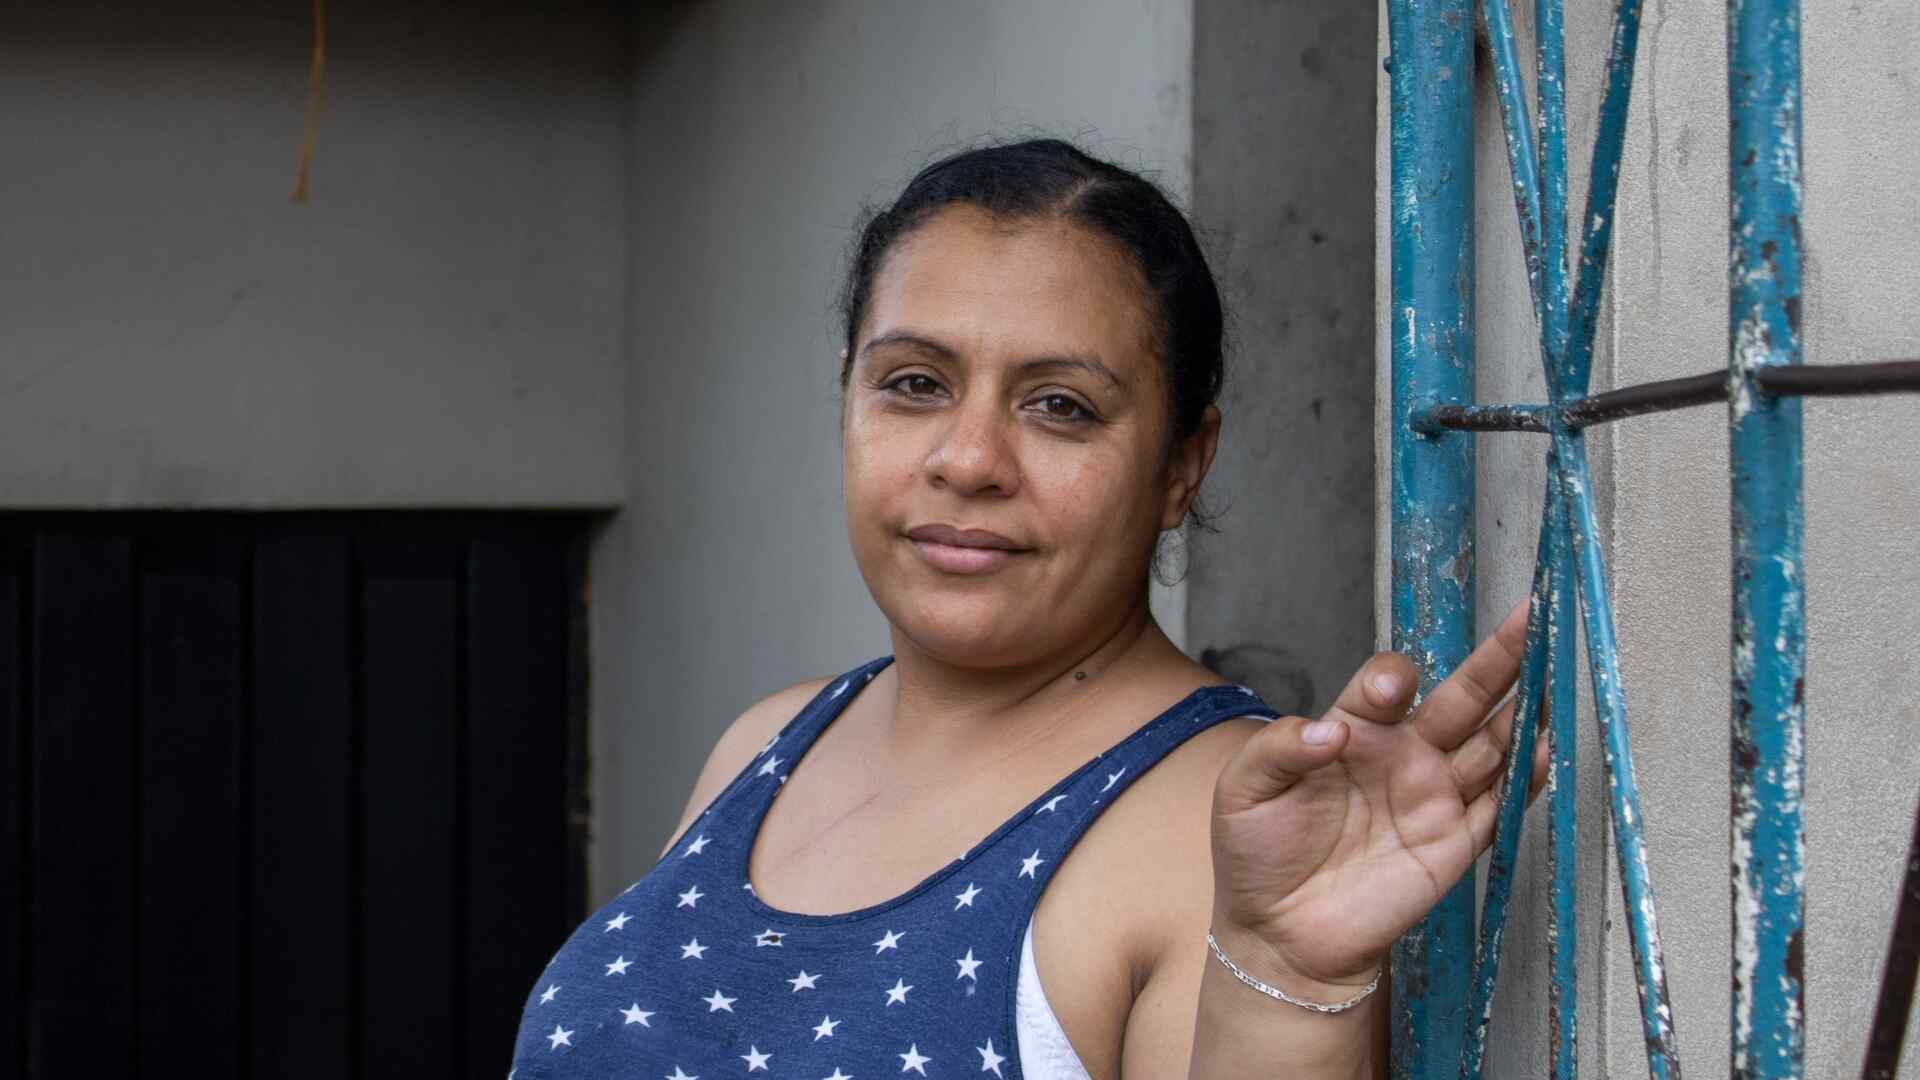 A Honduran woman poses for a portrait photo next to a blue gate.